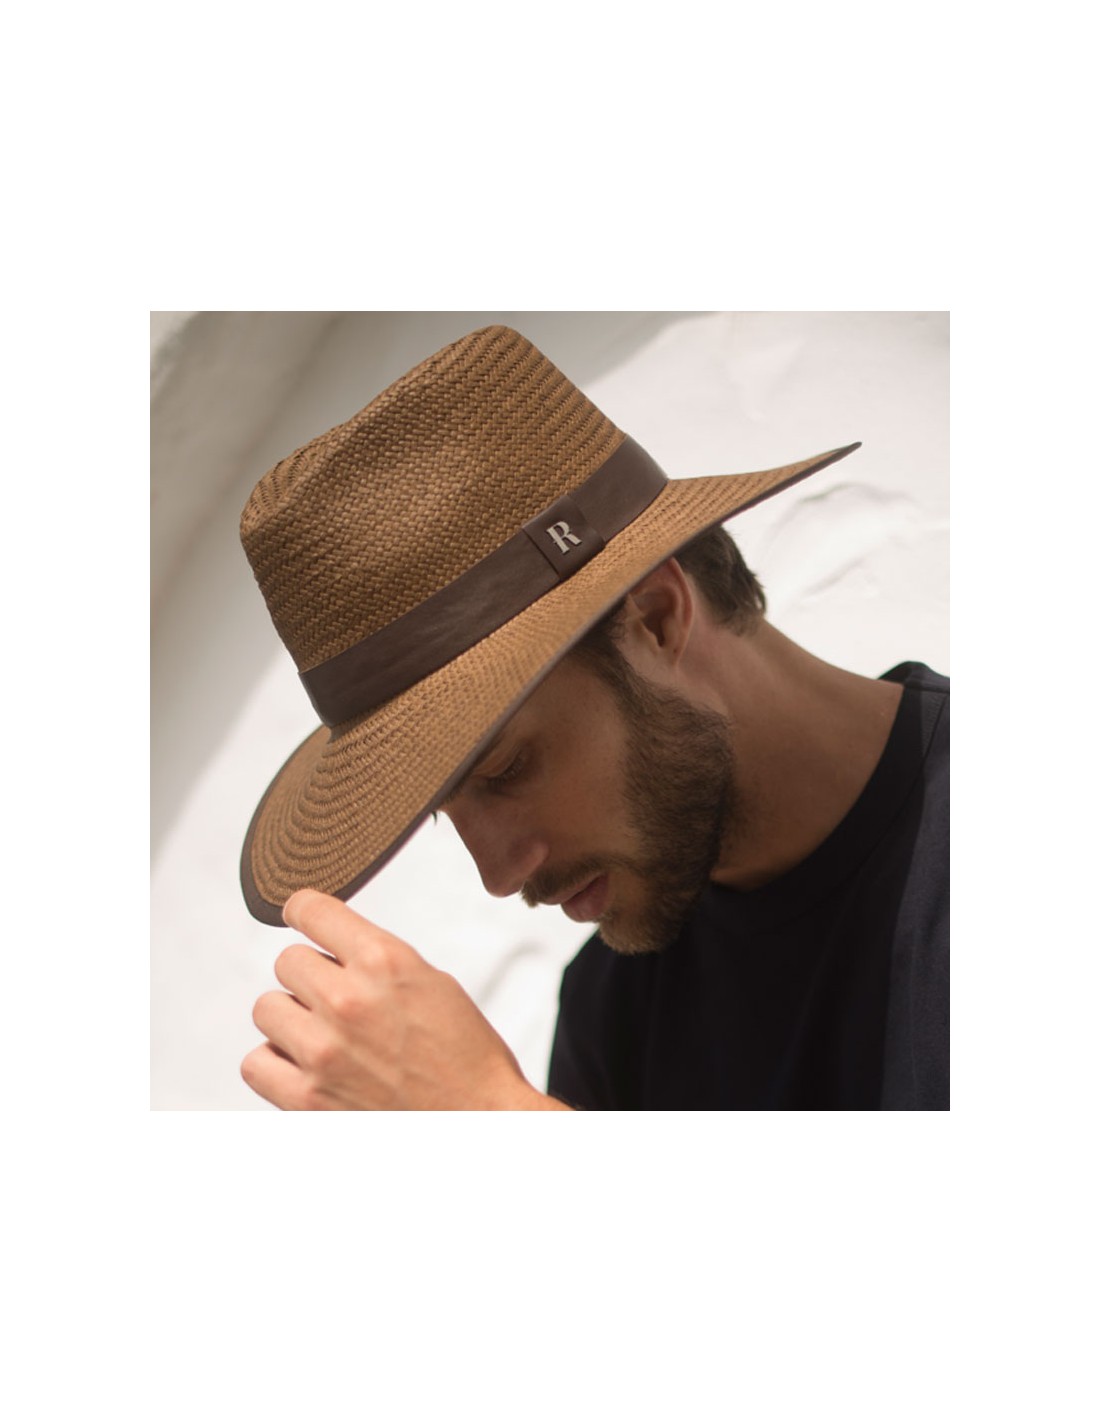 https://www.raceuhats.com/3766-thickbox_default/florida-brown-straw-hat-for-men.jpg